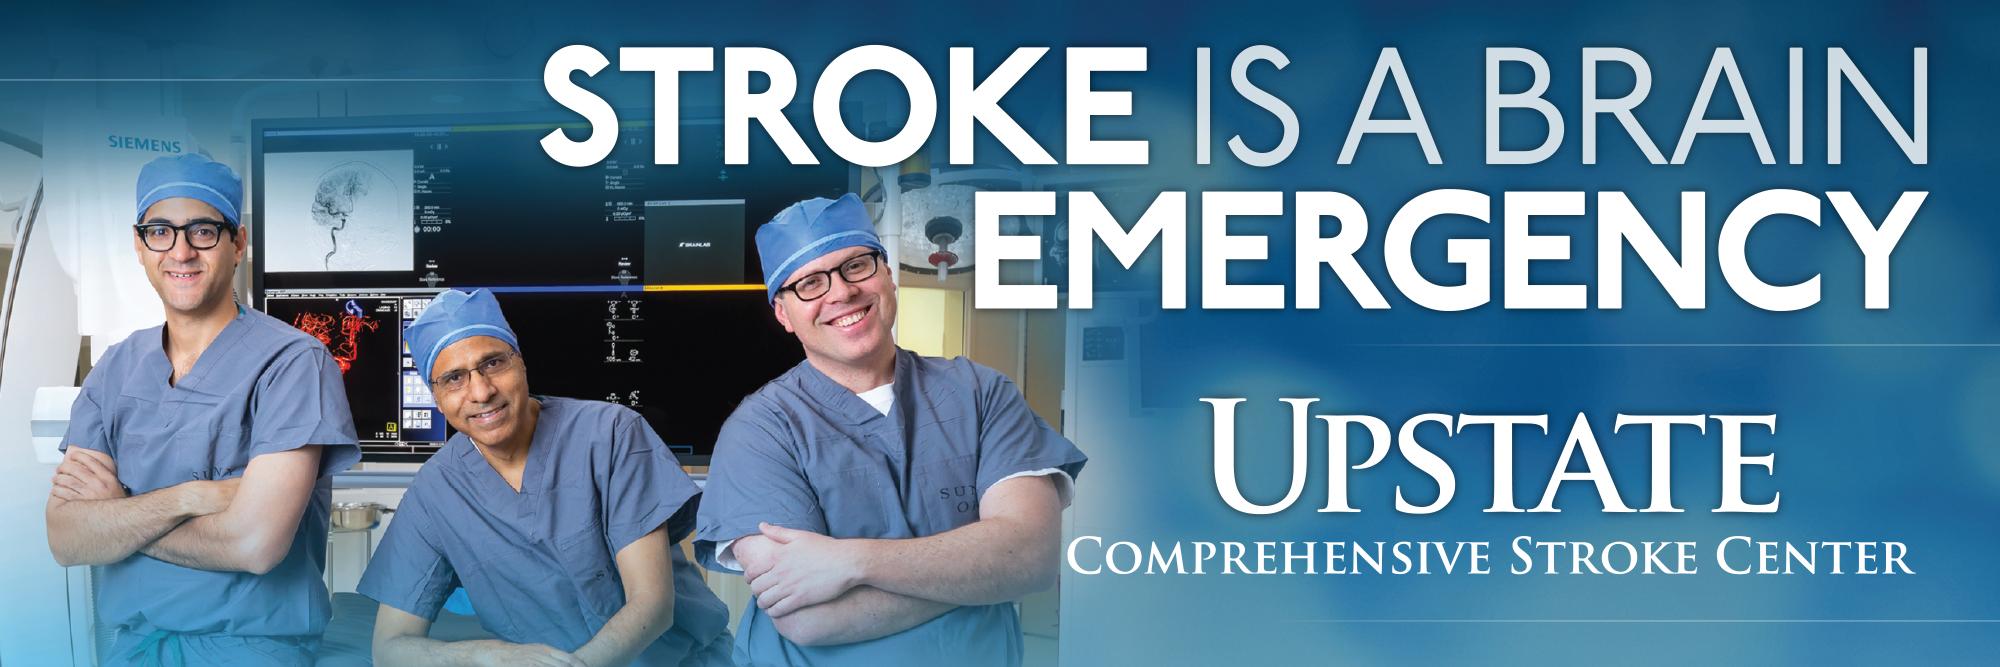 Upstate Comprehensive Stroke Center, Stroke a Brain Emergency